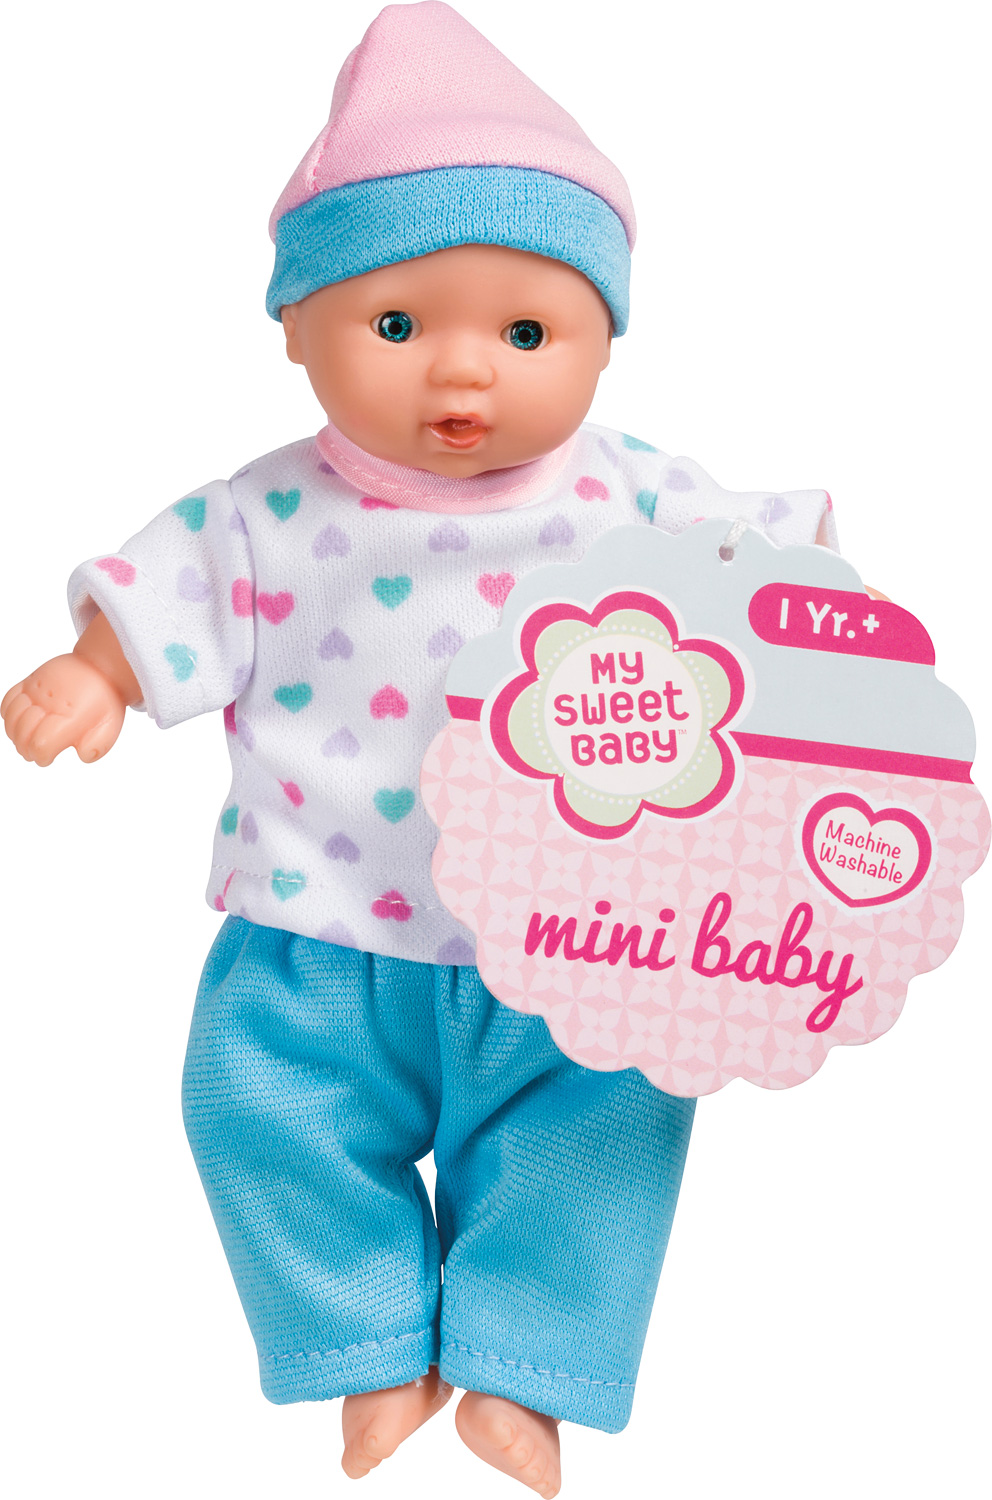 MINI BABIES – The Children's Gift Shop